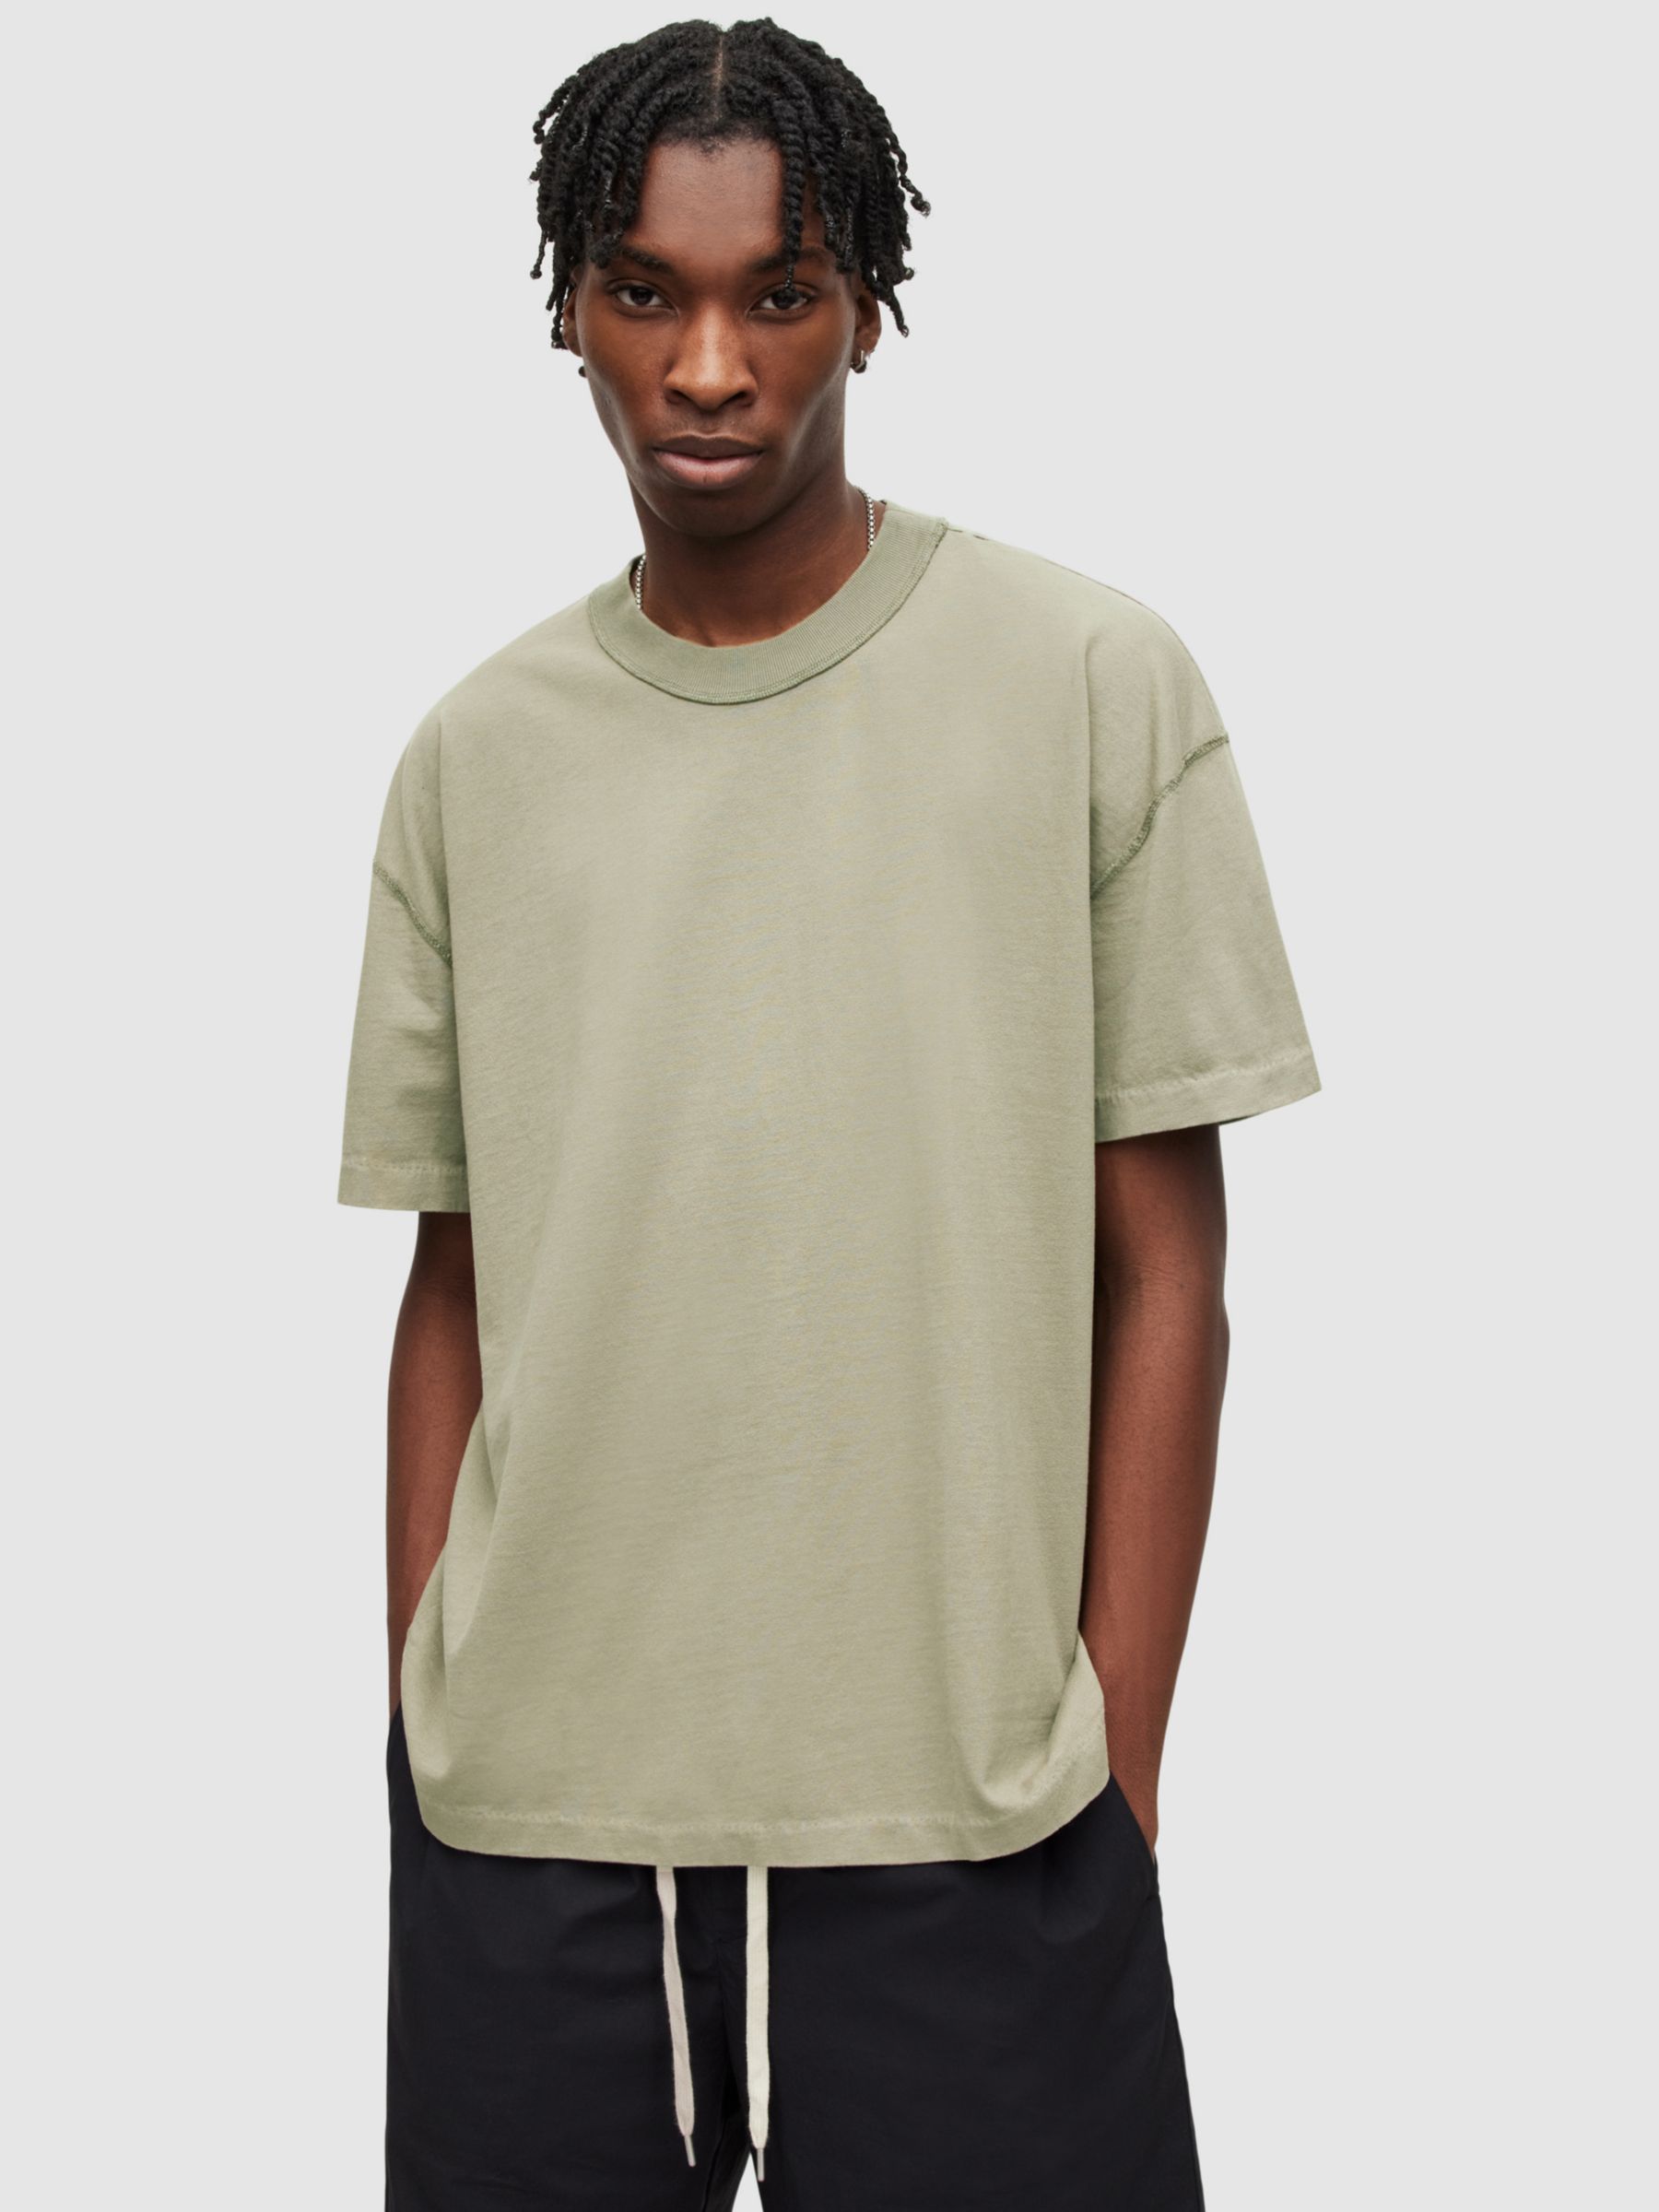 AllSaints Isac Short Sleeve Crew Neck T-Shirt, Leaf Green, XS